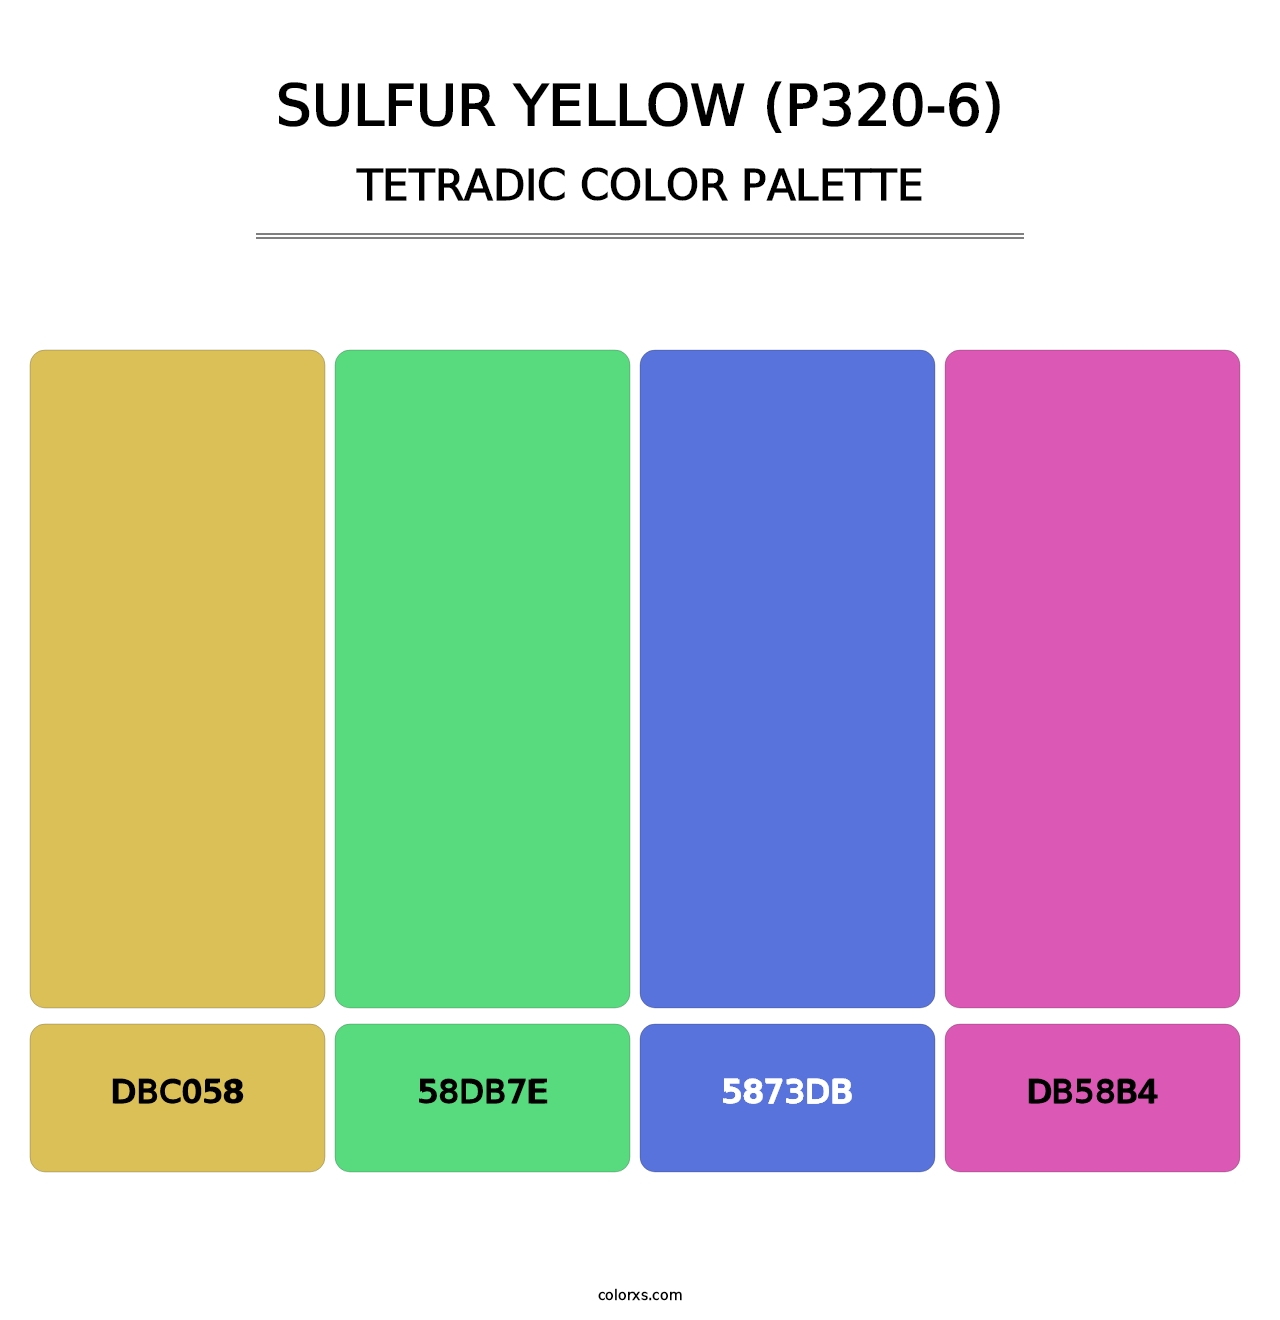 Sulfur Yellow (P320-6) - Tetradic Color Palette